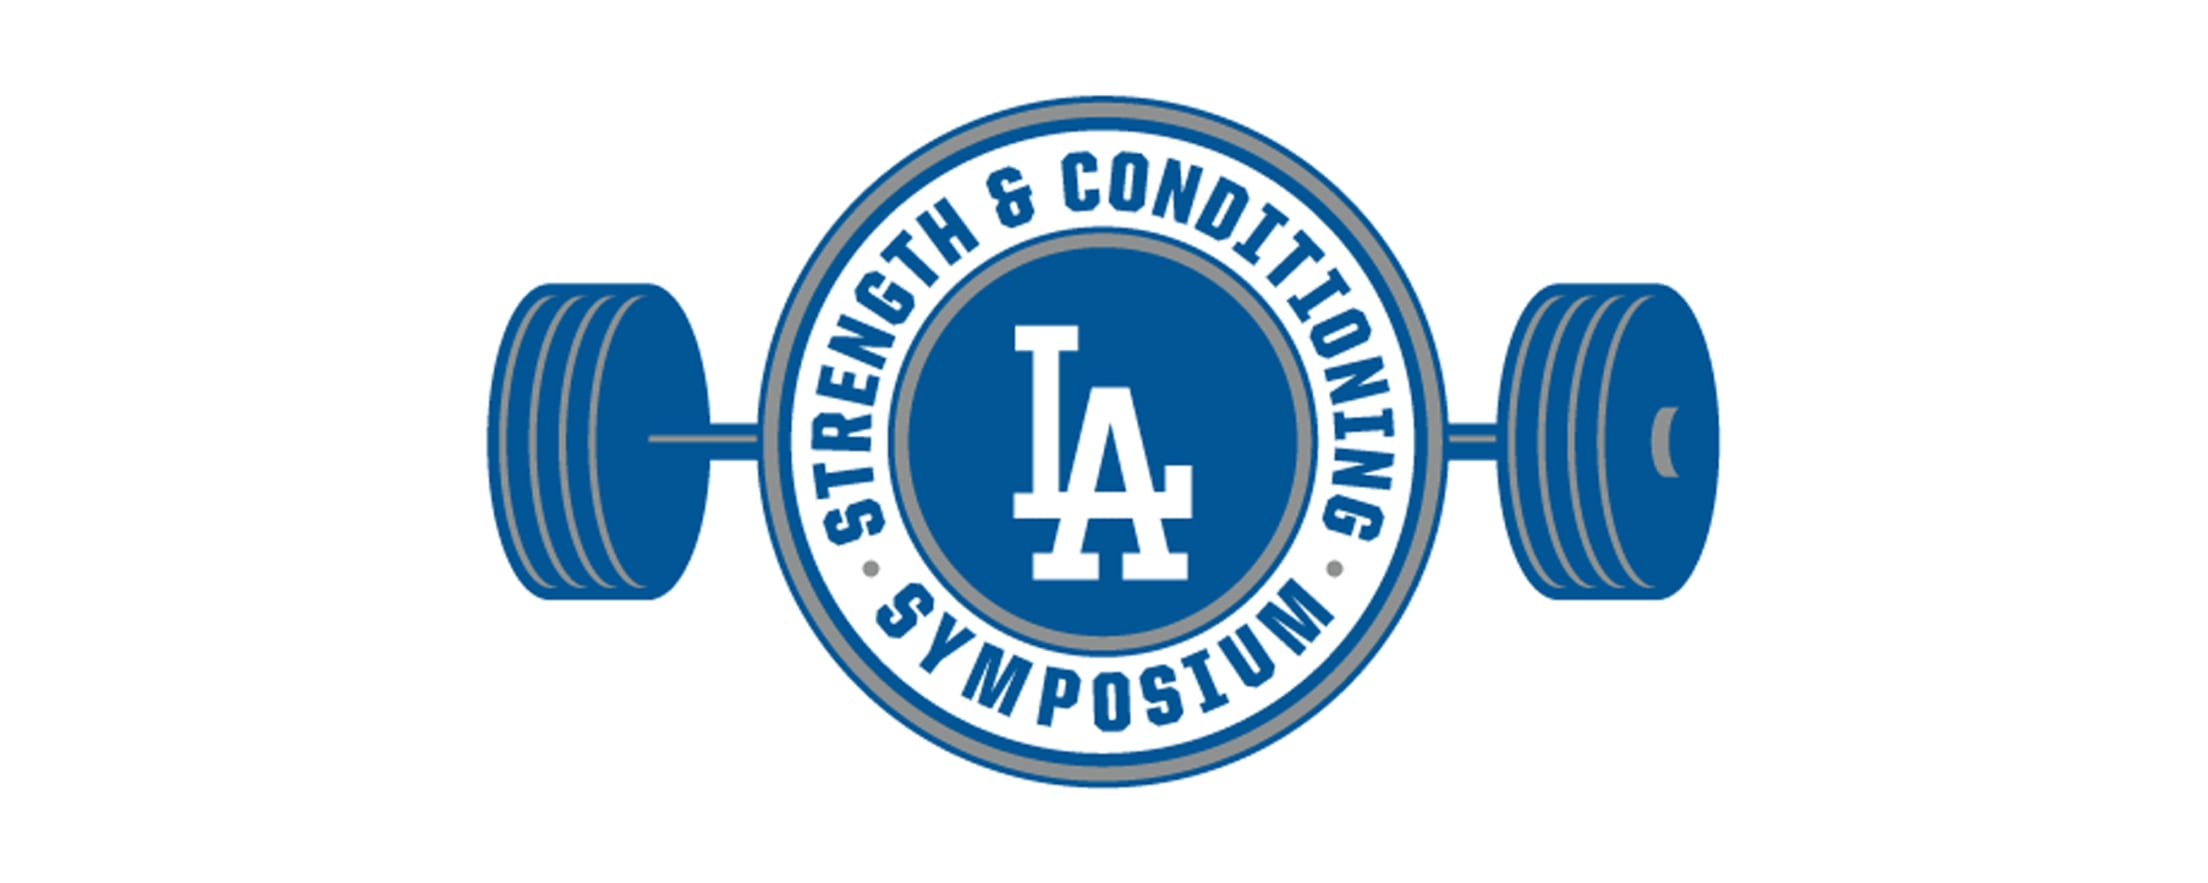 Los Angeles Dodgers - City Connect Men's Sport Cut Jersey MD